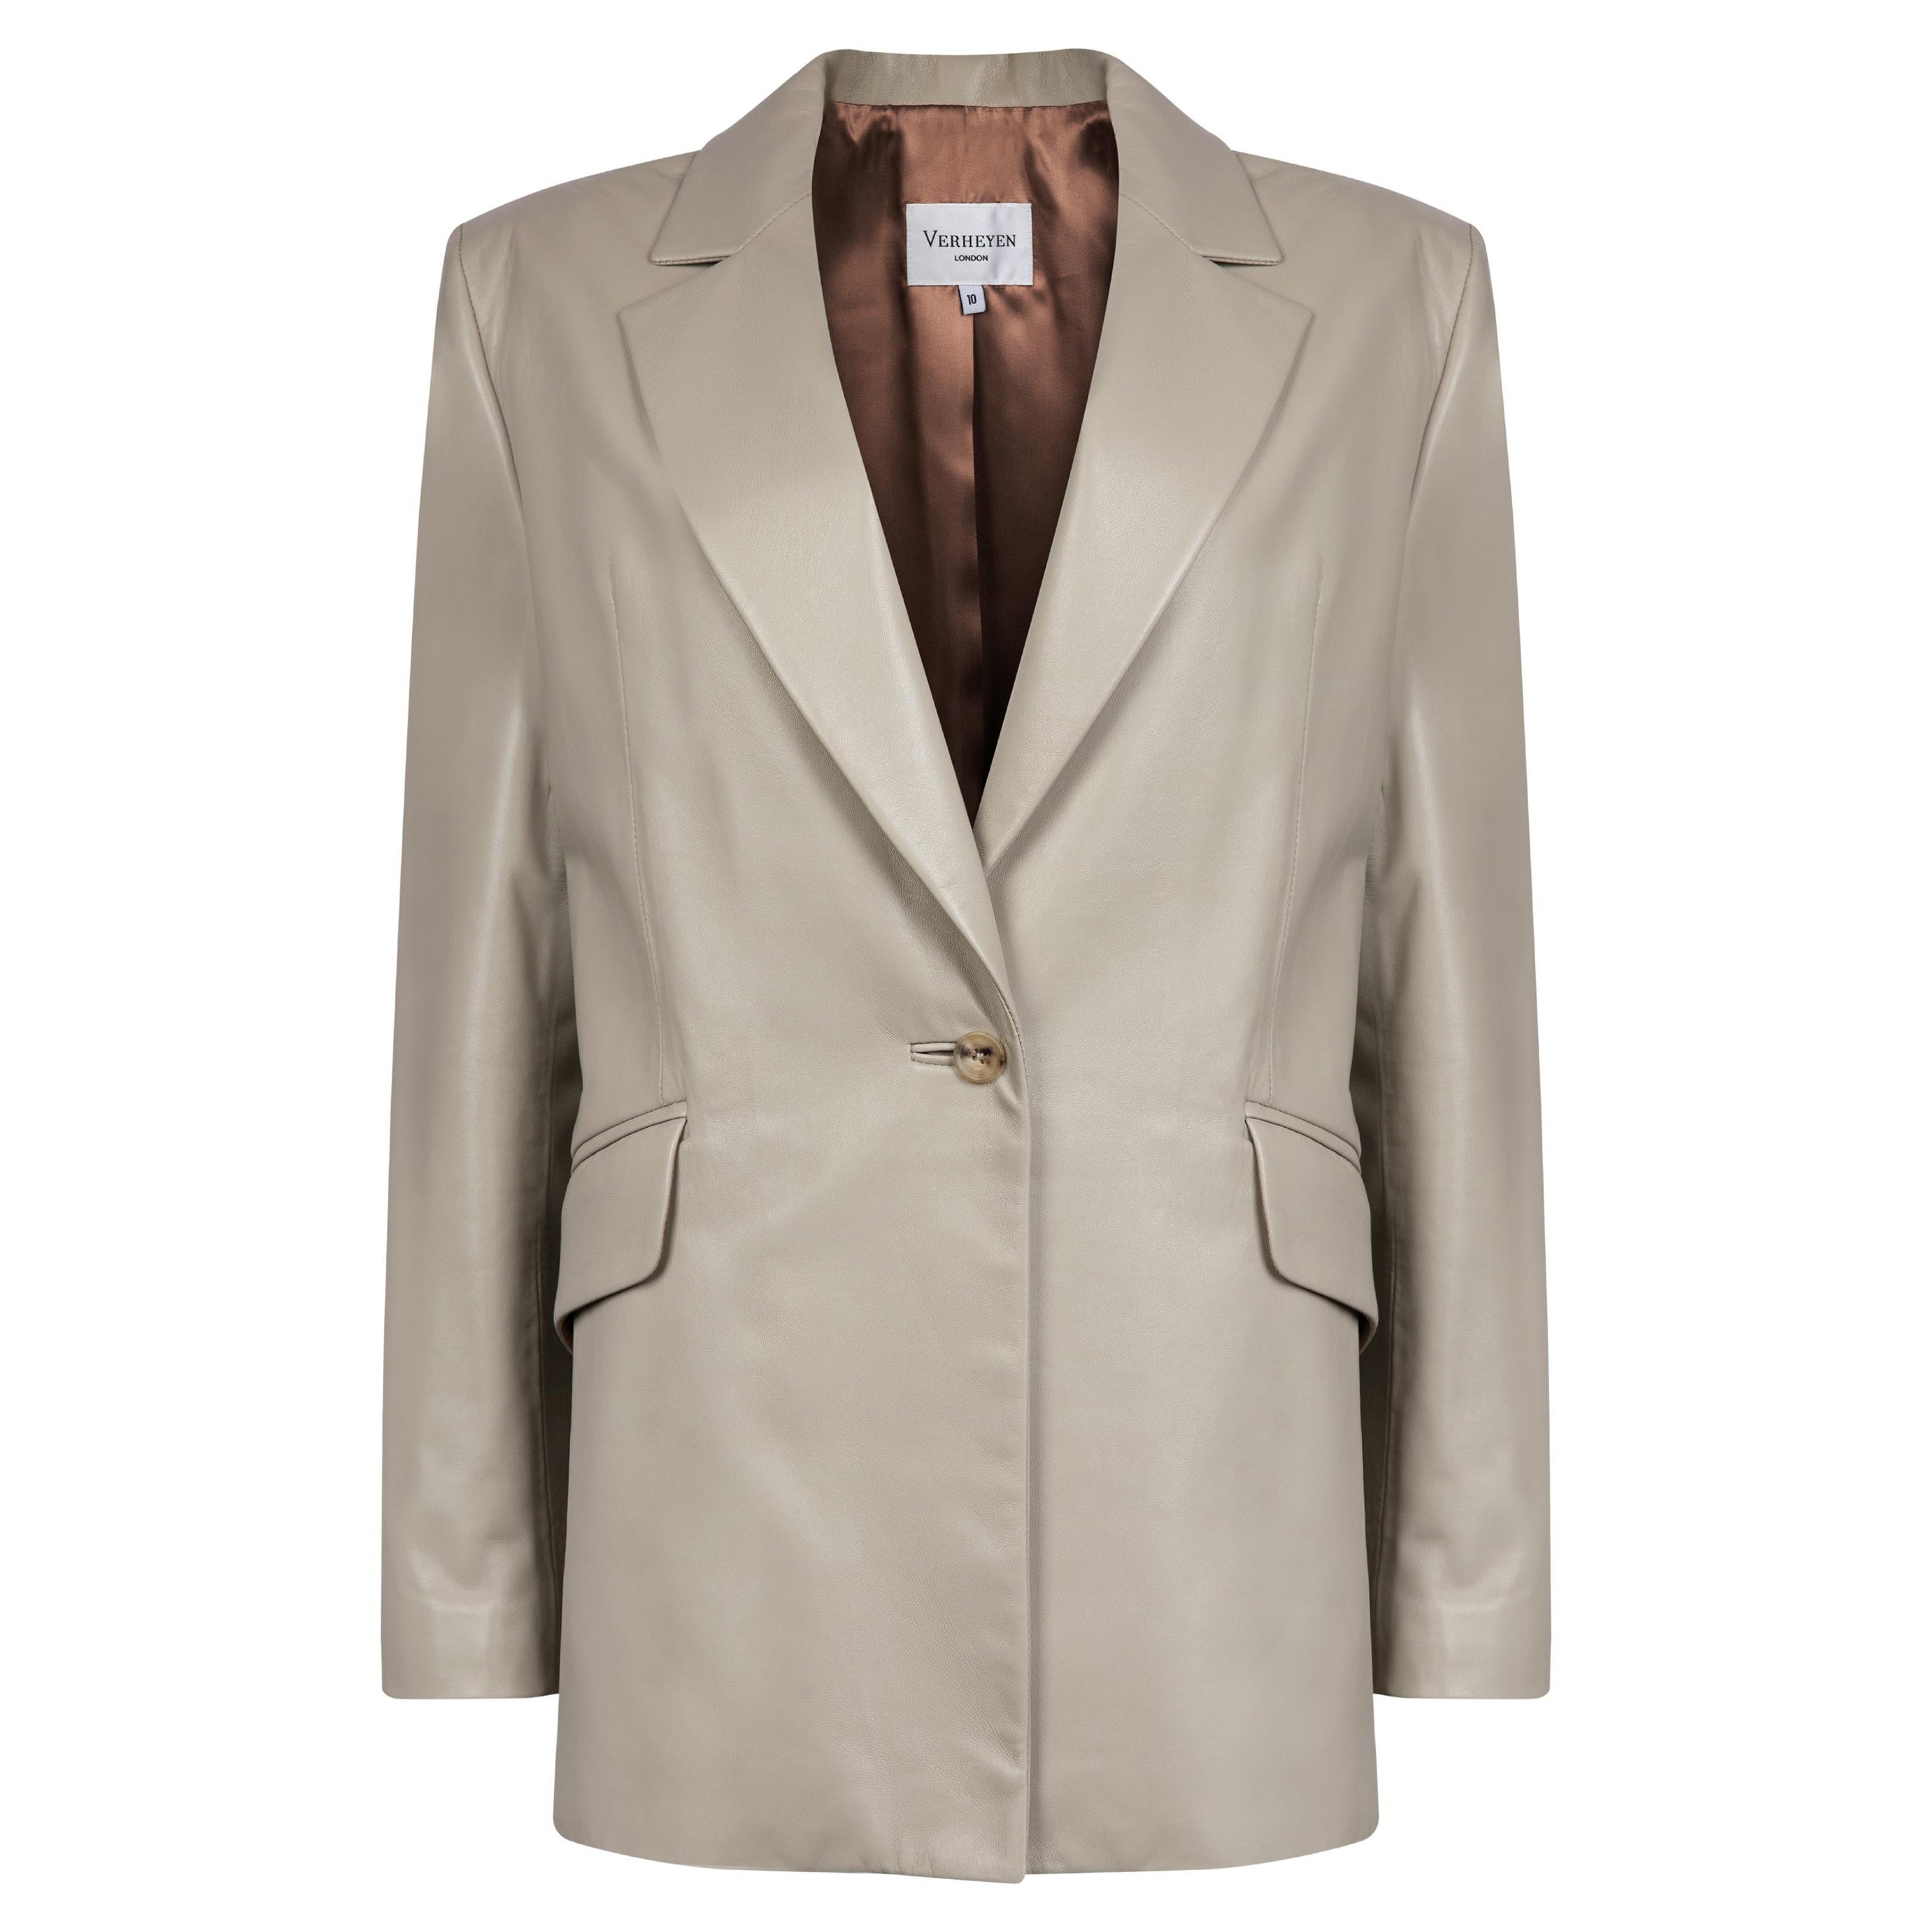 Verheyen London Chesca Oversize Blazer in Stone Grey Leather, Size 12 For Sale